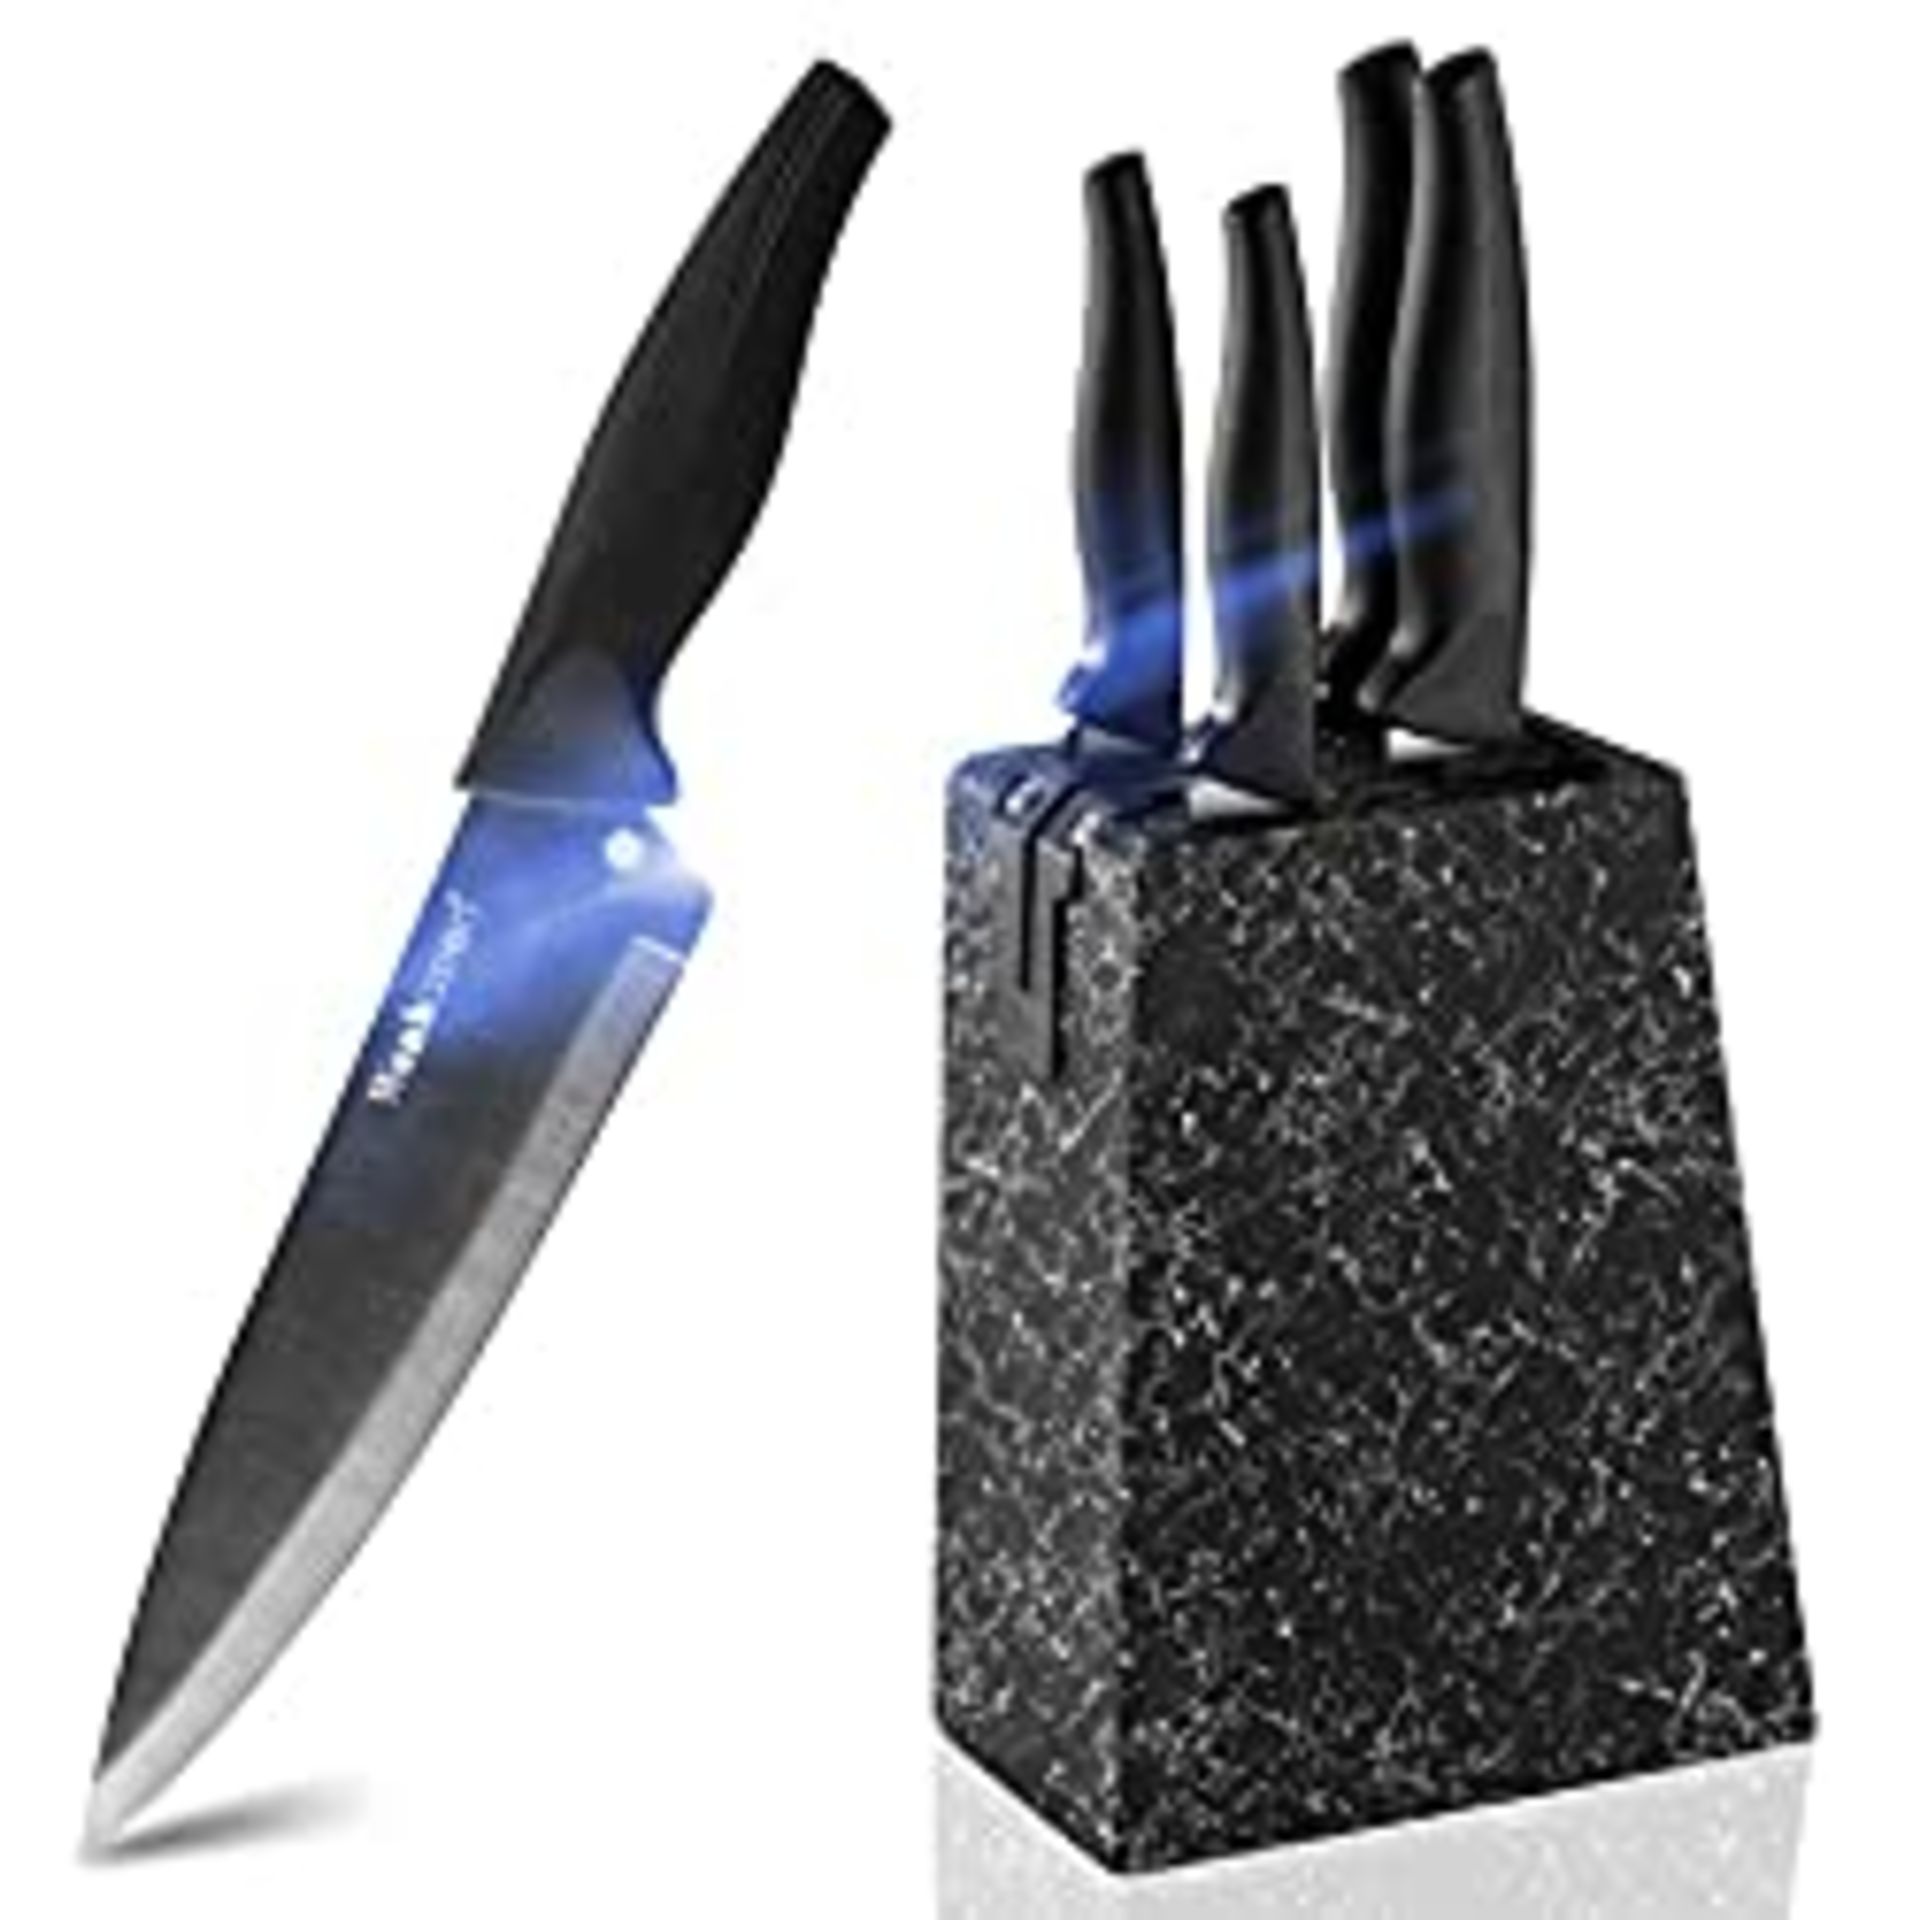 RRP £32.99 Wanbasion Black Professional Knife Block with Knives Sharp